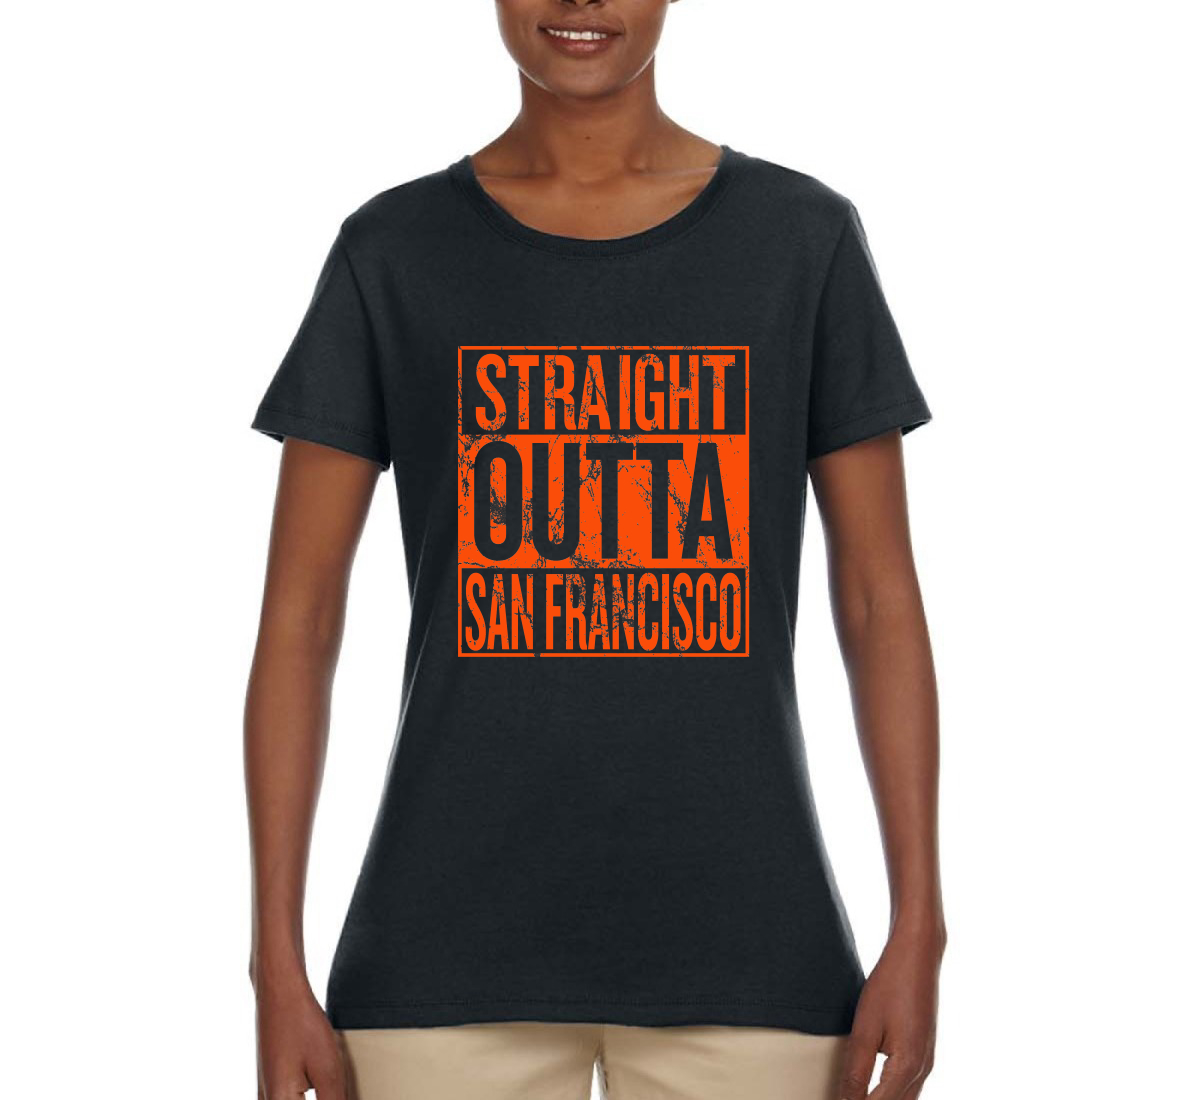 Straight Outta San Francisco SF Fan | Fantasy Baseball Fans | Womens Sports Graphic T-Shirt, Black, Medium - image 2 of 4